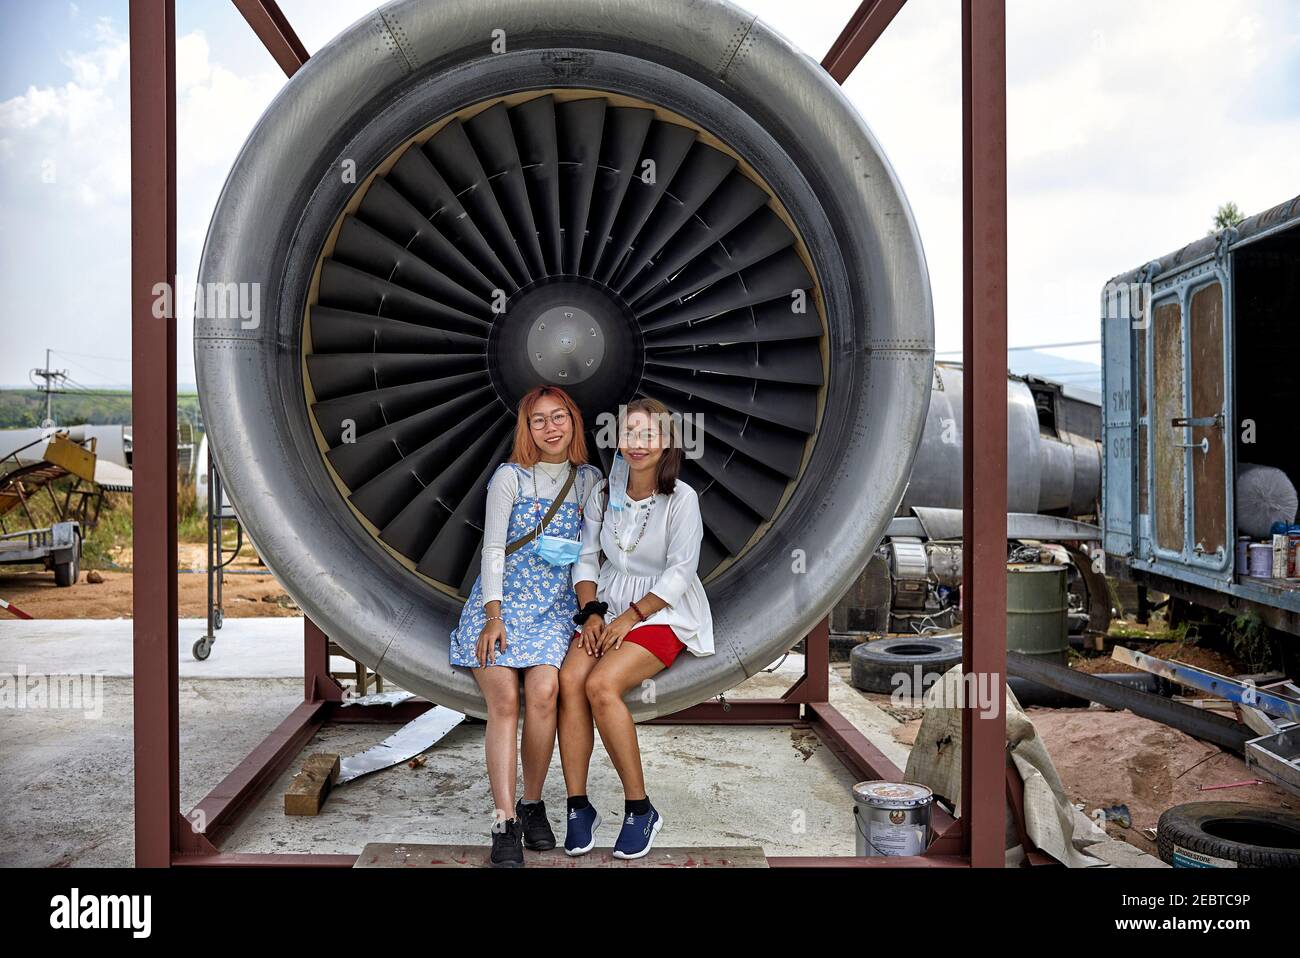 People sat inside a jet turbine engine providing human size comparison Stock Photo